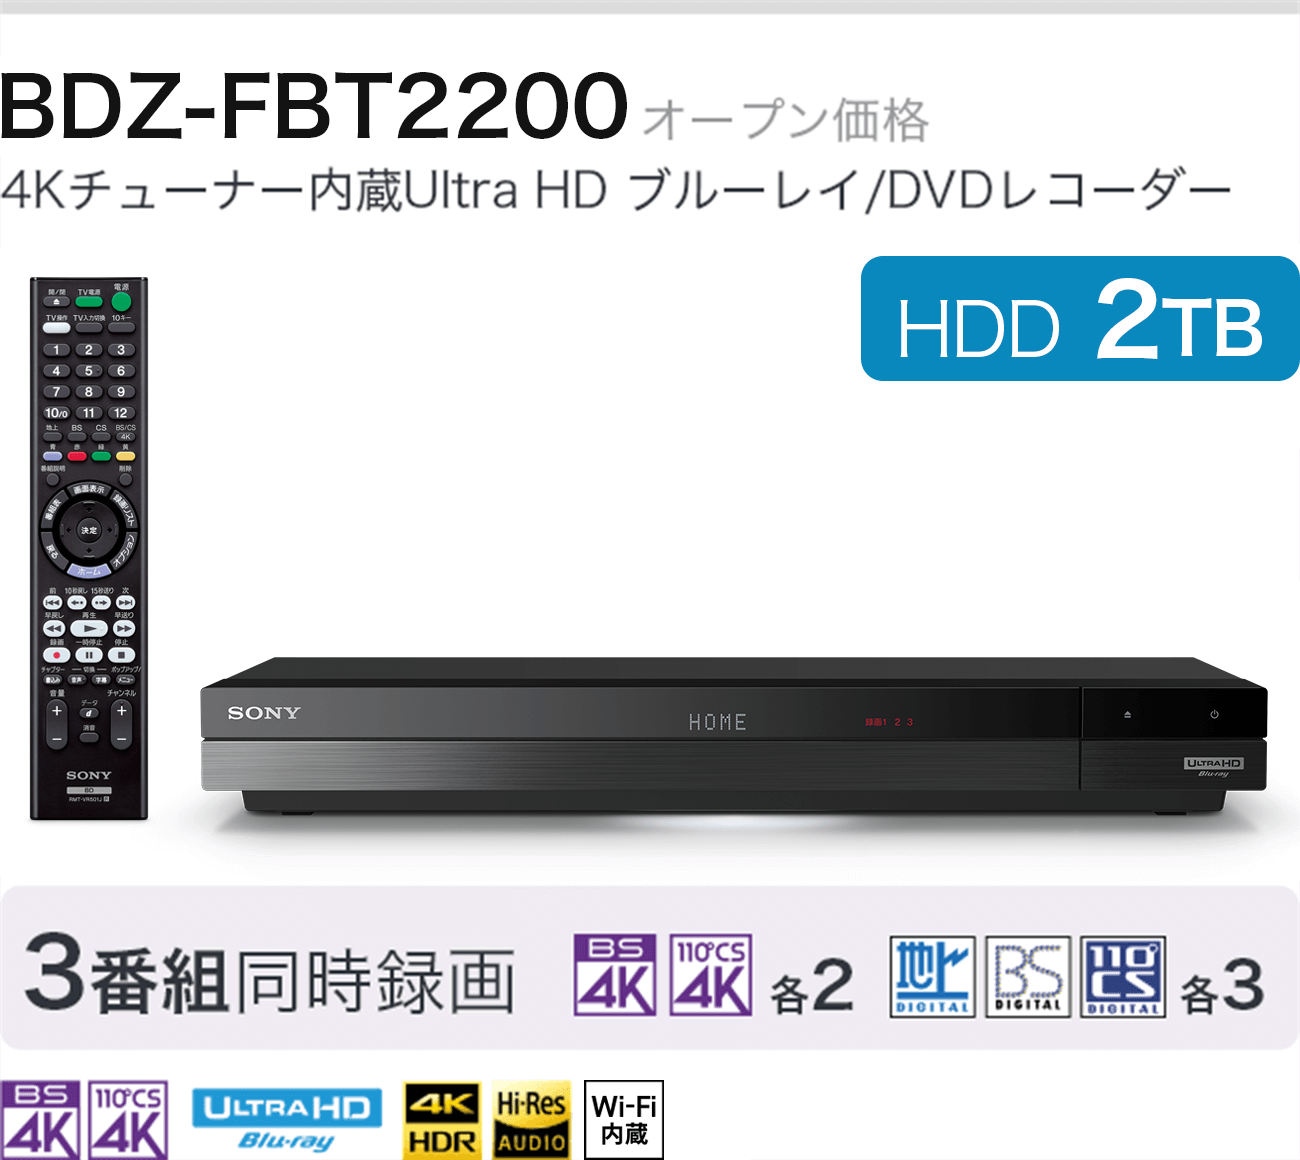 BDZ-FBT2200 オープン価格 4Kチューナー内蔵Ultra HD ブルーレイ/DVDレコーダー HDD 2TB 3番組同時録画